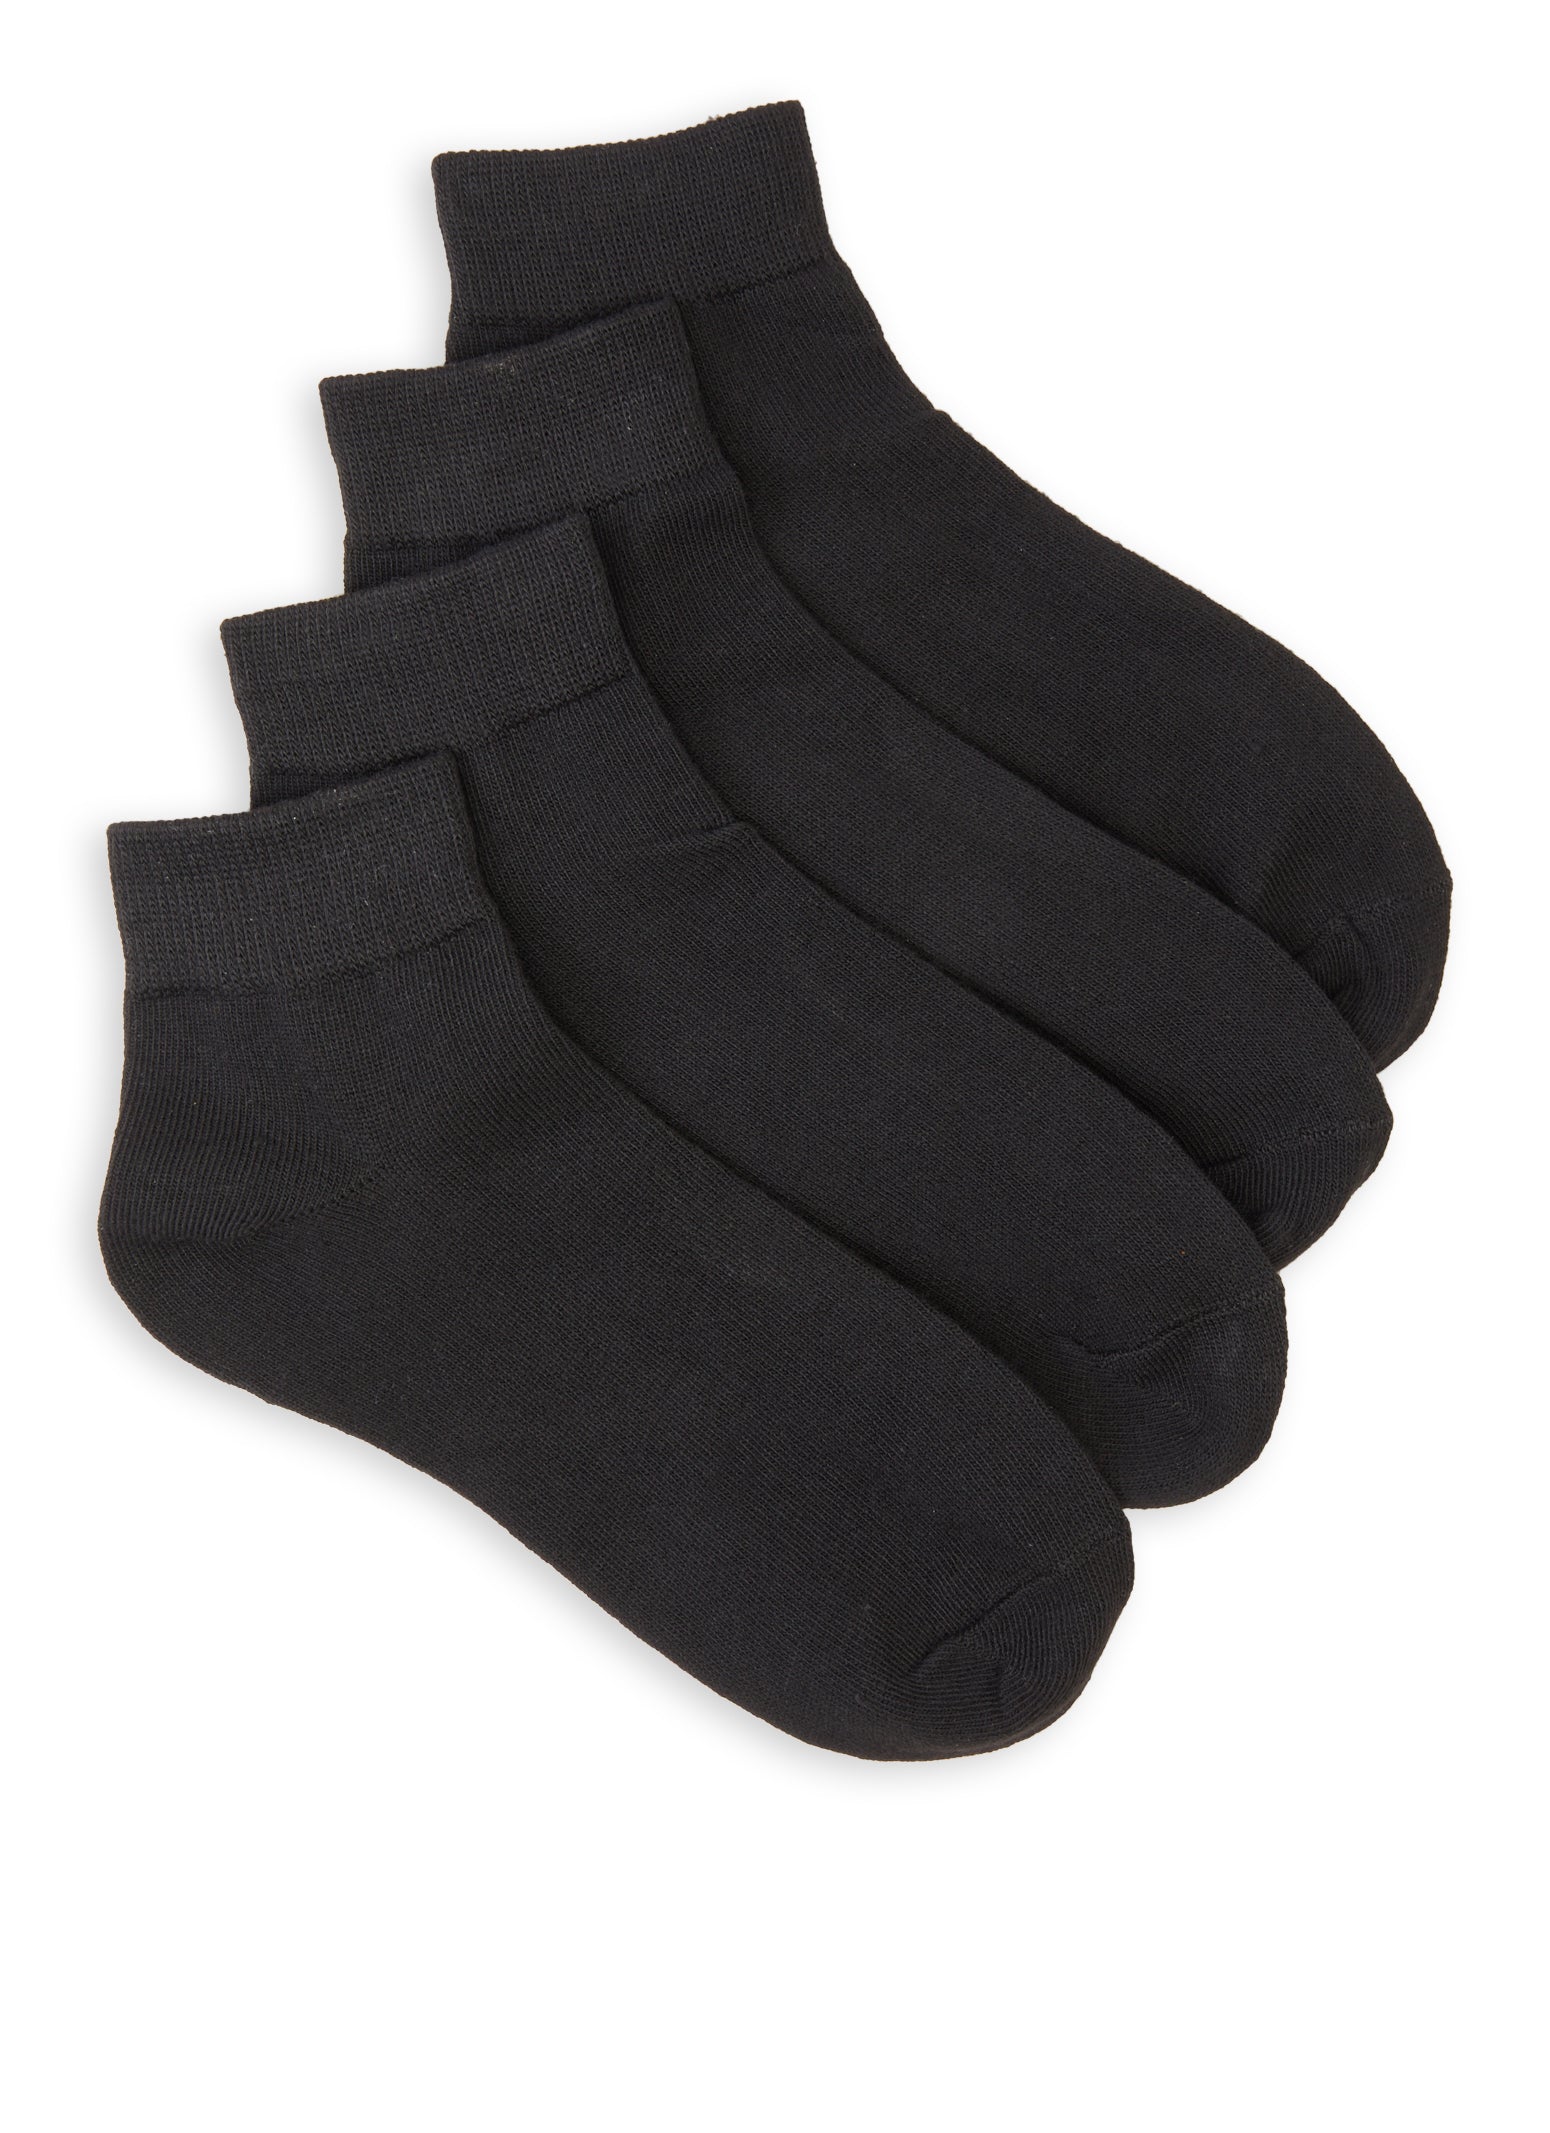 Set of 4 Black Socks Size 9-11